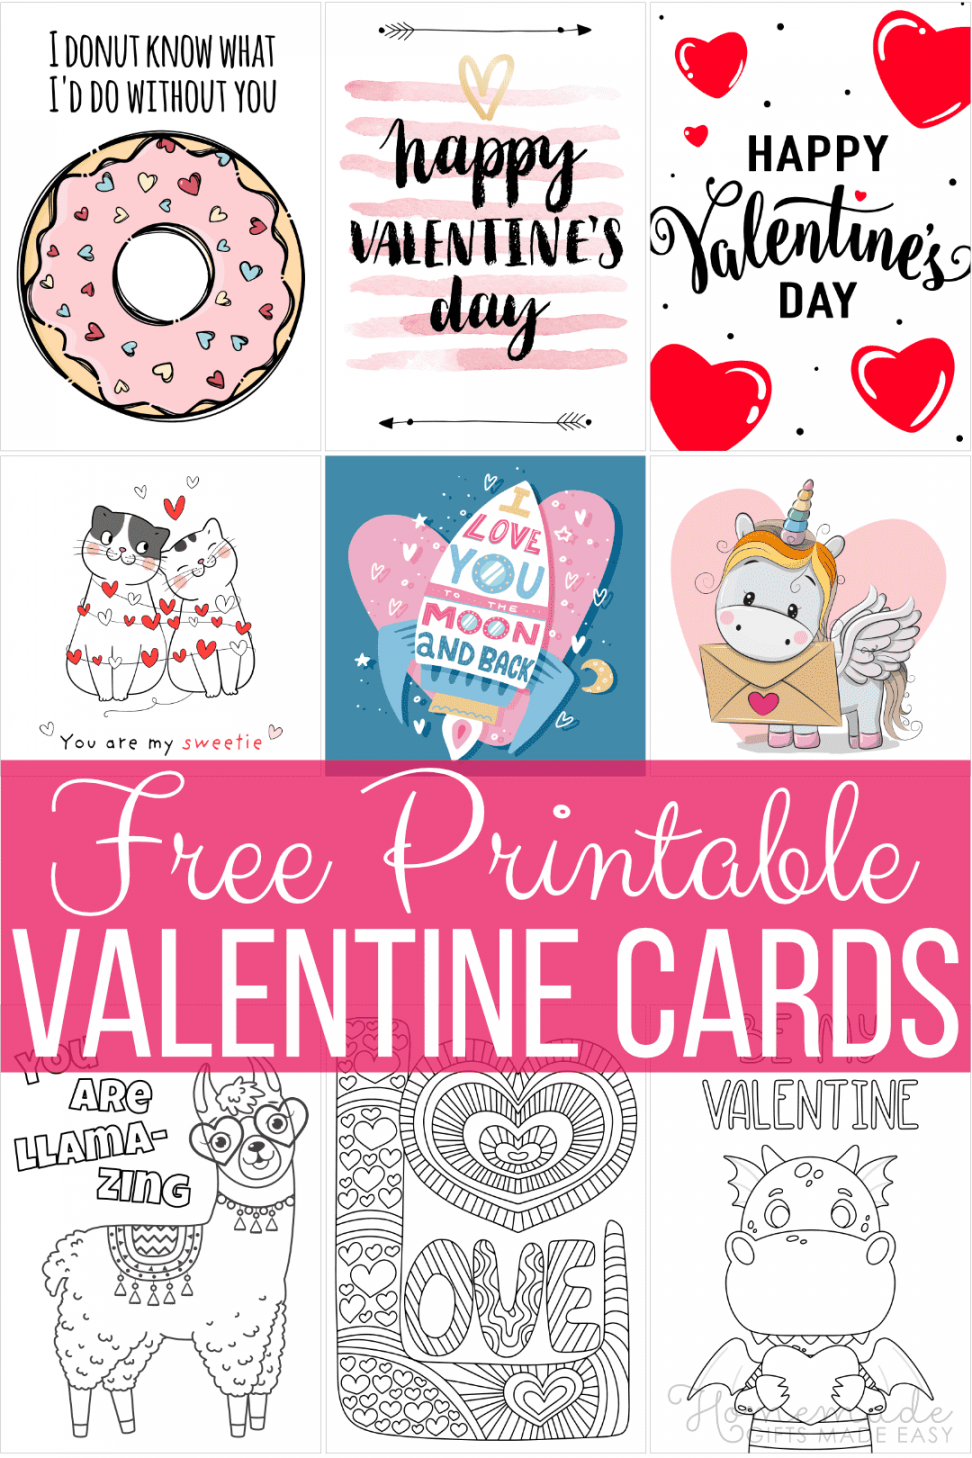 Free Printable Valentines Cards - Printable -  Free Printable Valentine Cards for